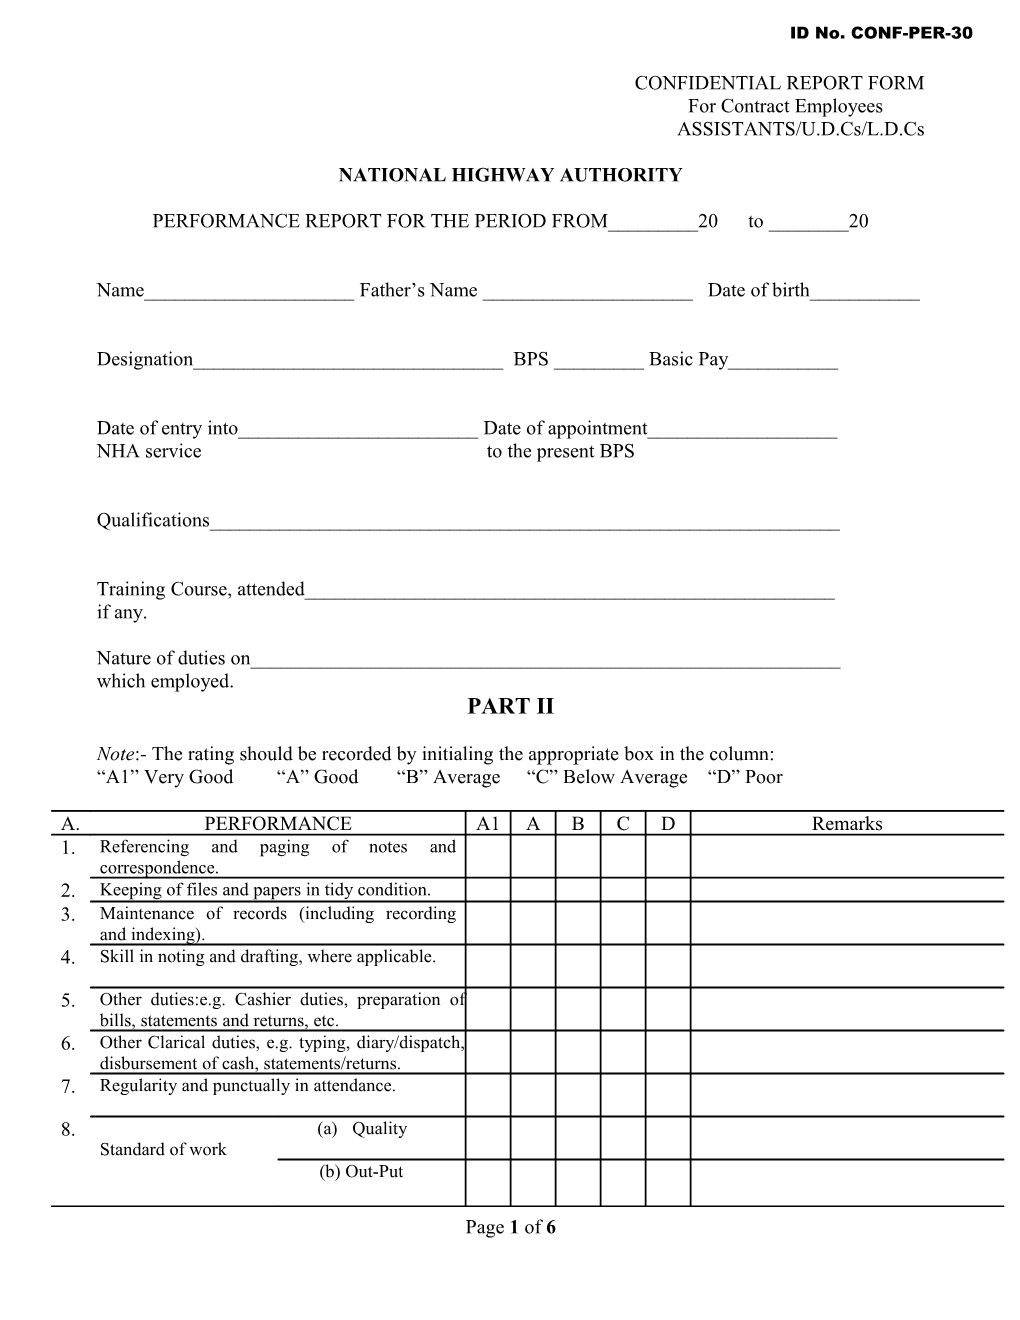 Confidential Report Form